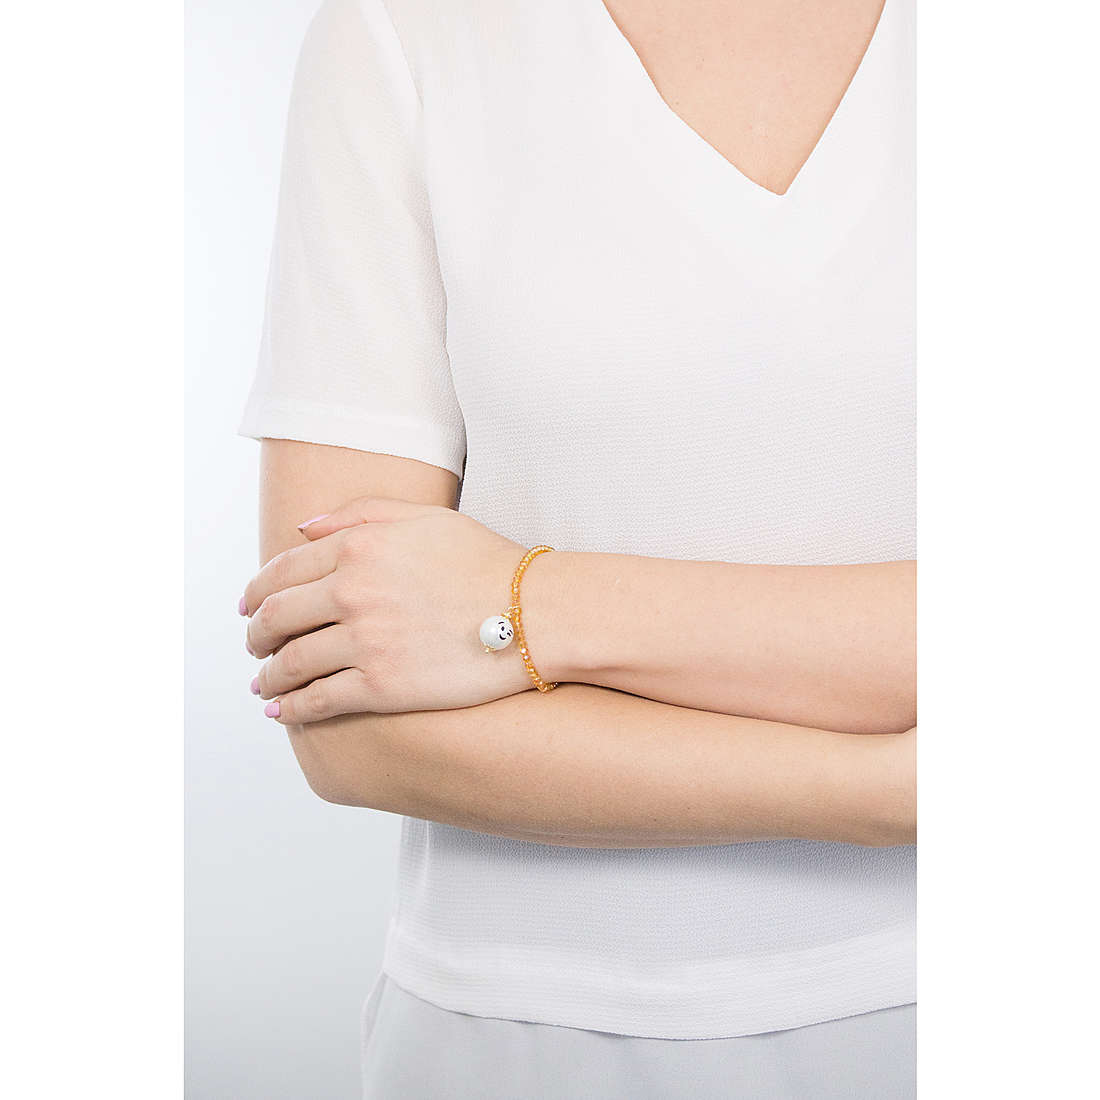 Le Carose bracciali Emoji donna EMOBR01 indosso